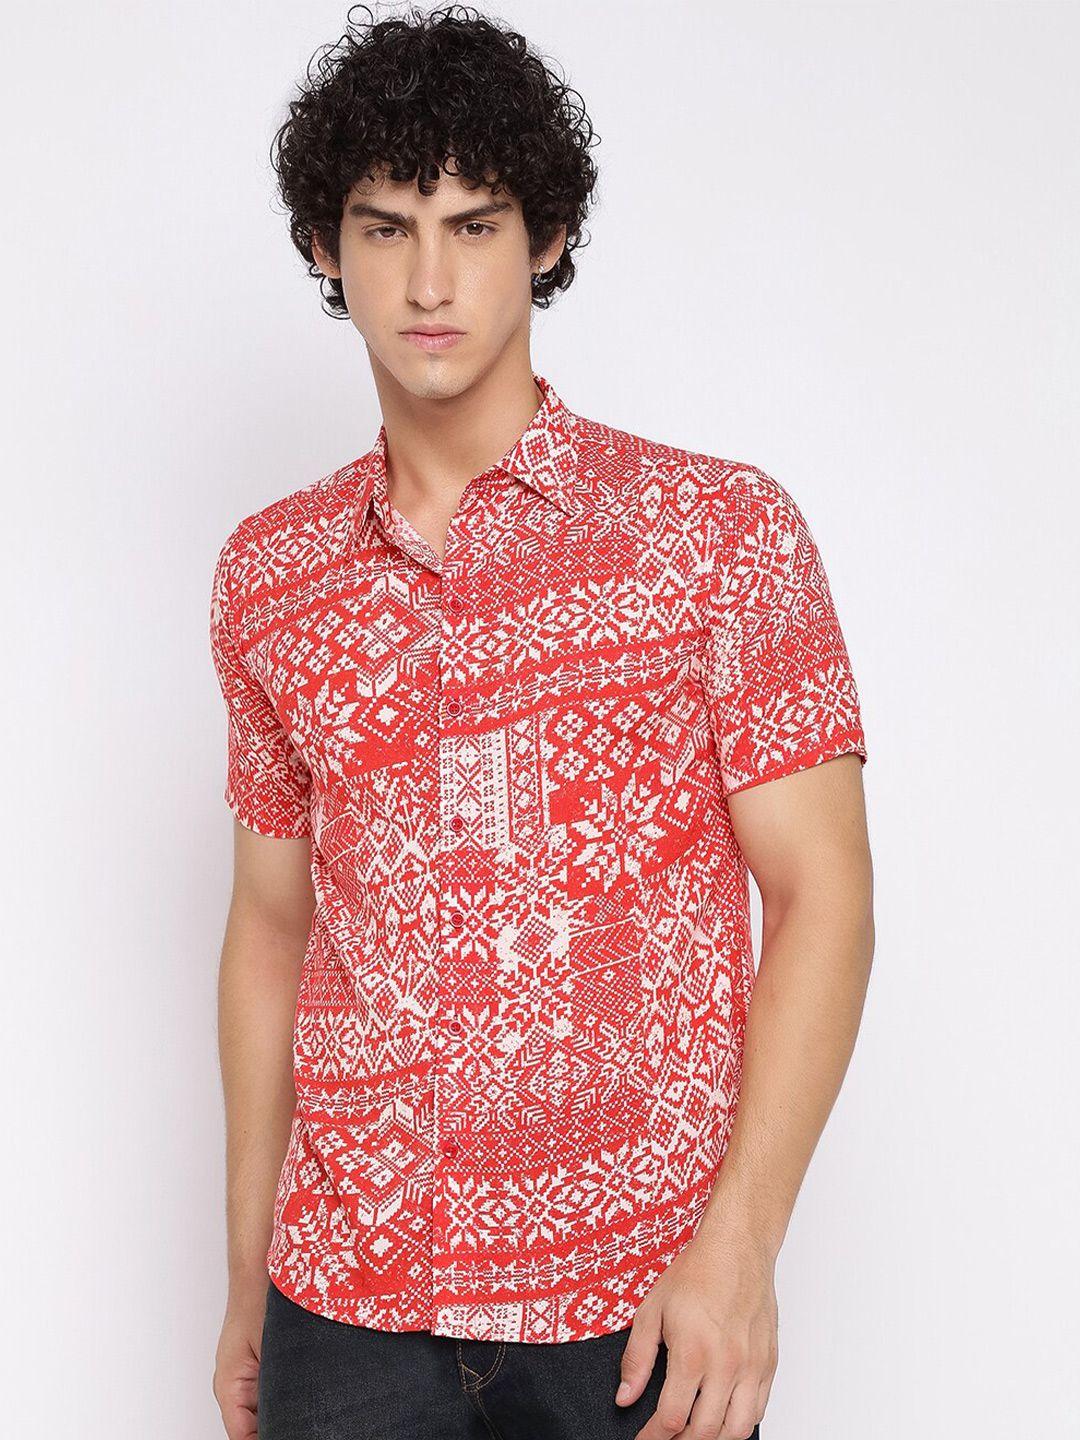 shurtz n skurtz relaxed ethnic motifs printed regular fit cotton casual shirt